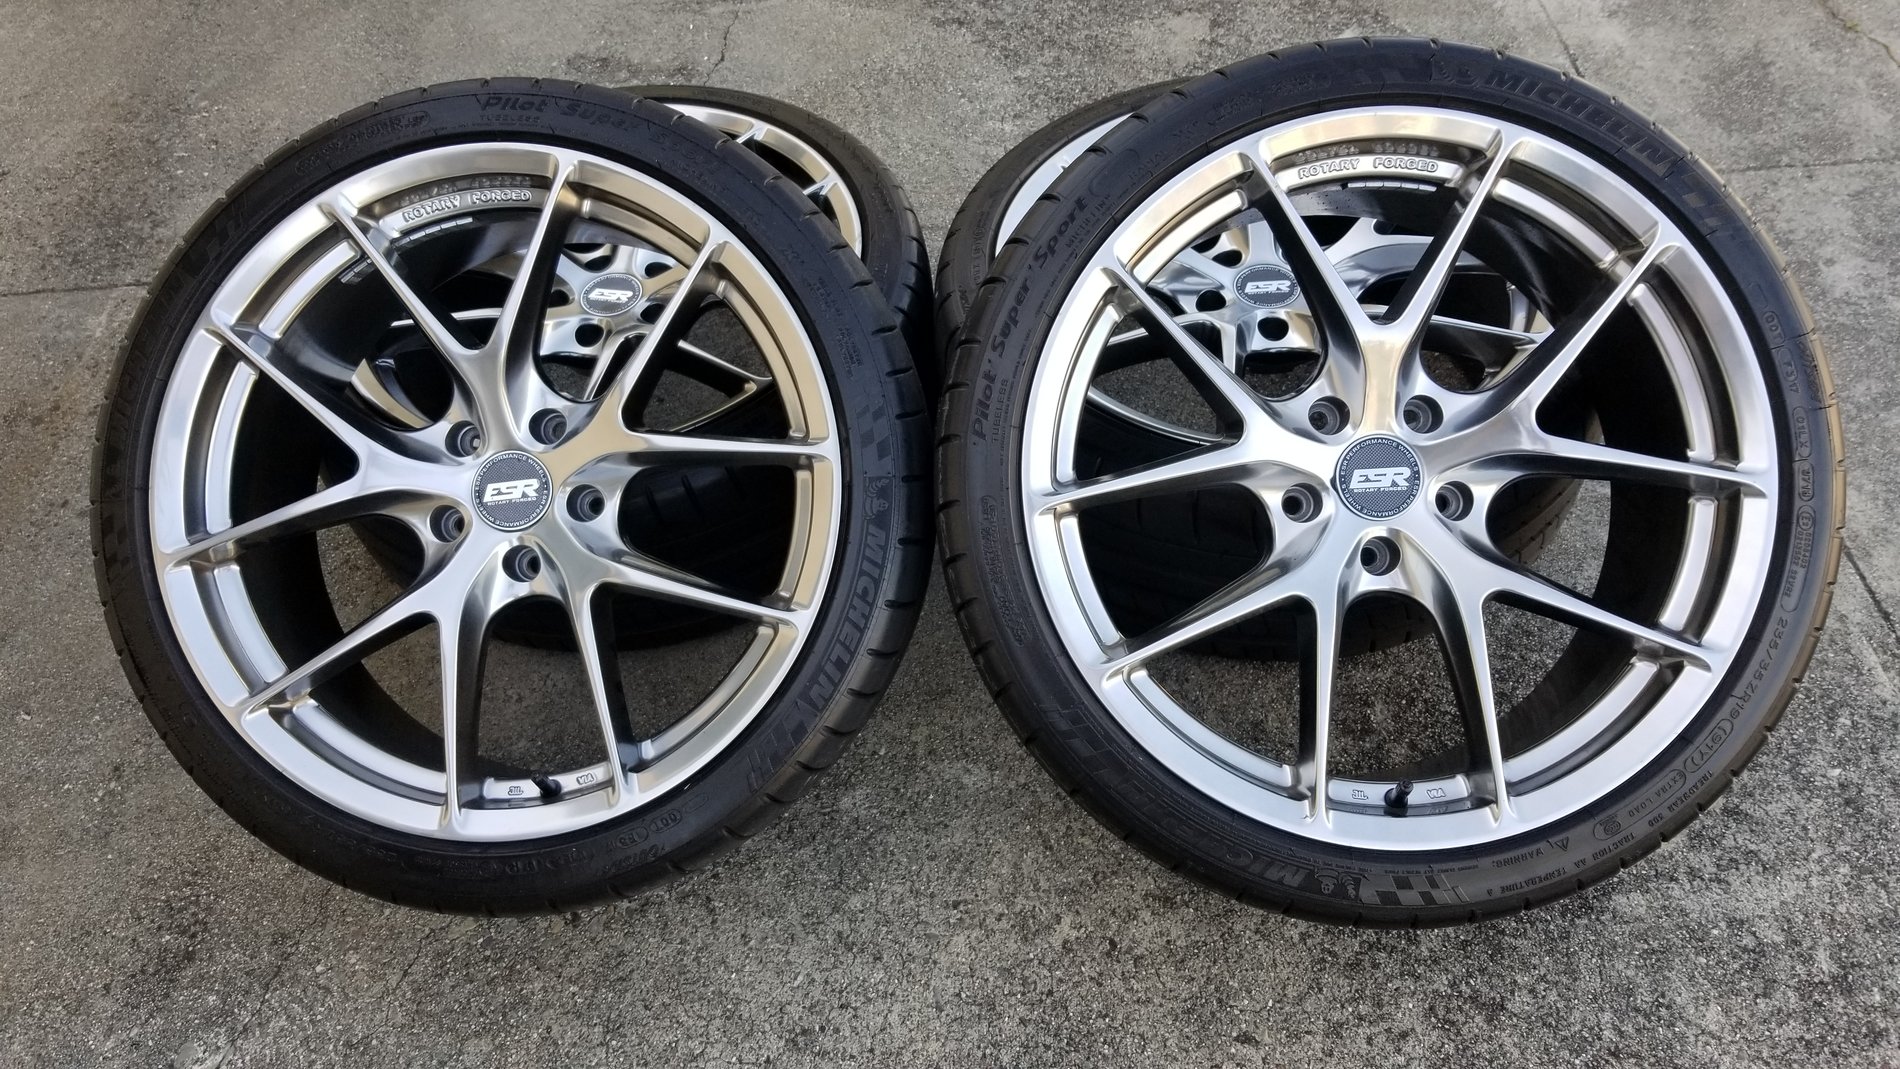 Honda Civic 10th gen FS: 19" ESR Forged Wheels 19X8.5 and Michelin Tires - SF Bay Area 20190501_083111